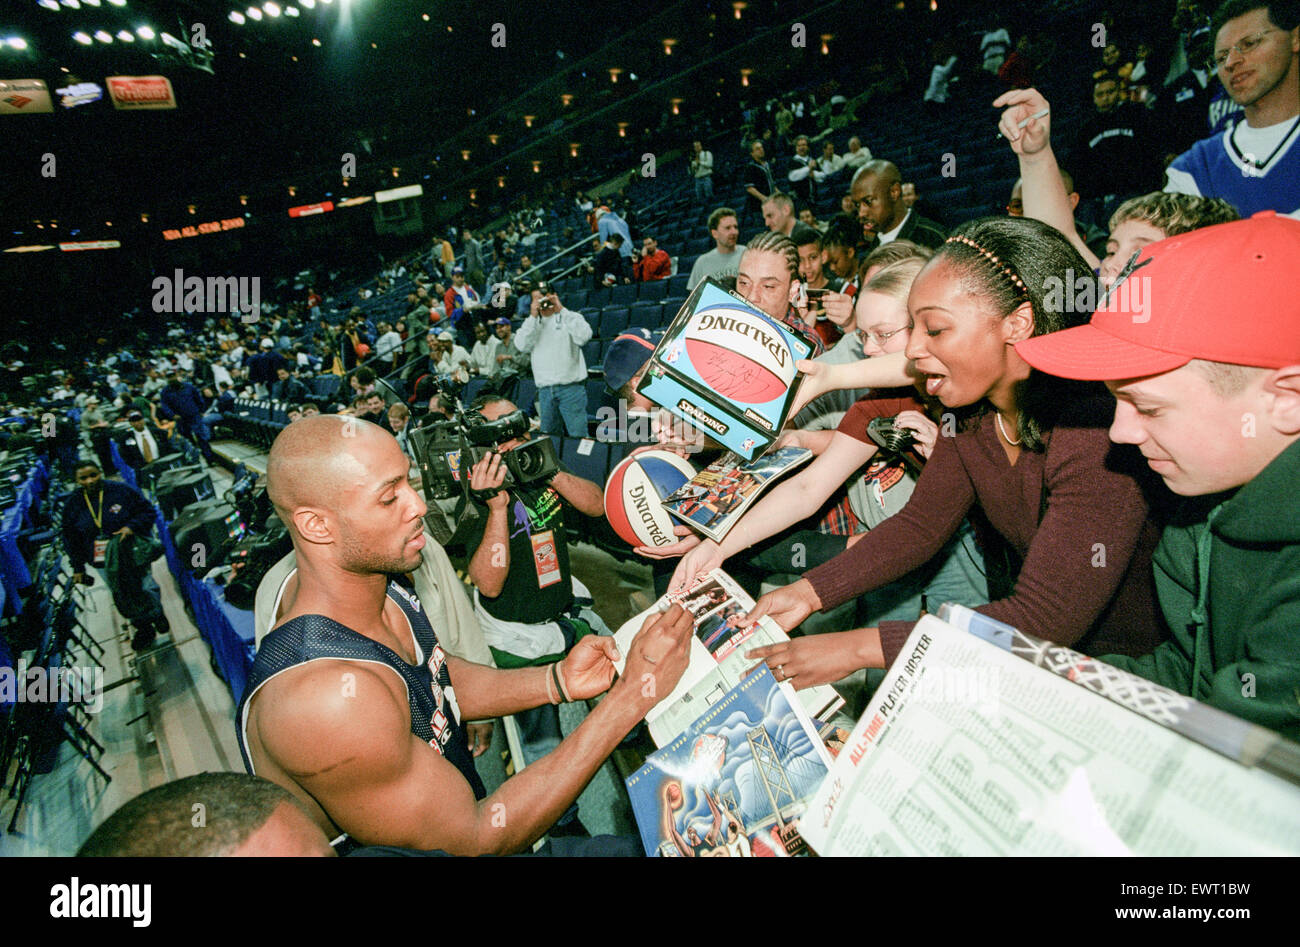 Oakland, Ca - 13. Februar: das NBA all-star Game in Oakland, Kalifornien am 13. Februar 2000. Stockfoto